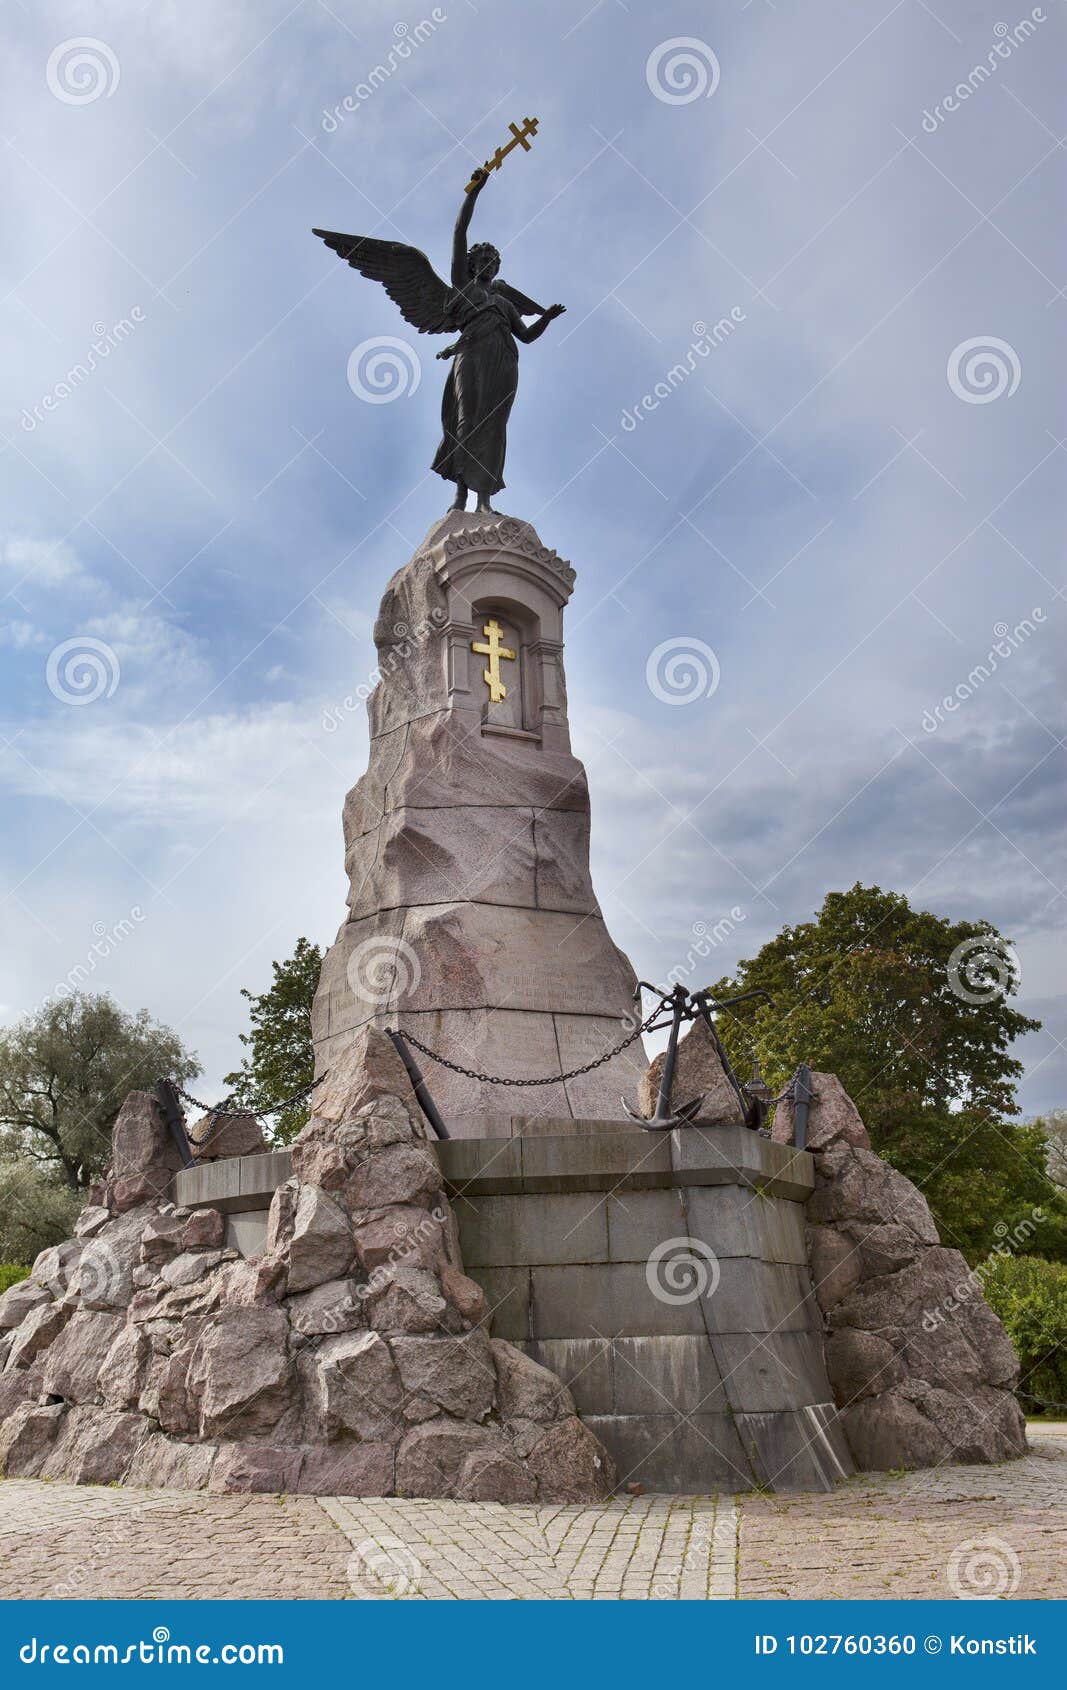 Monument to Jaan Poska — KADRIORG PARK